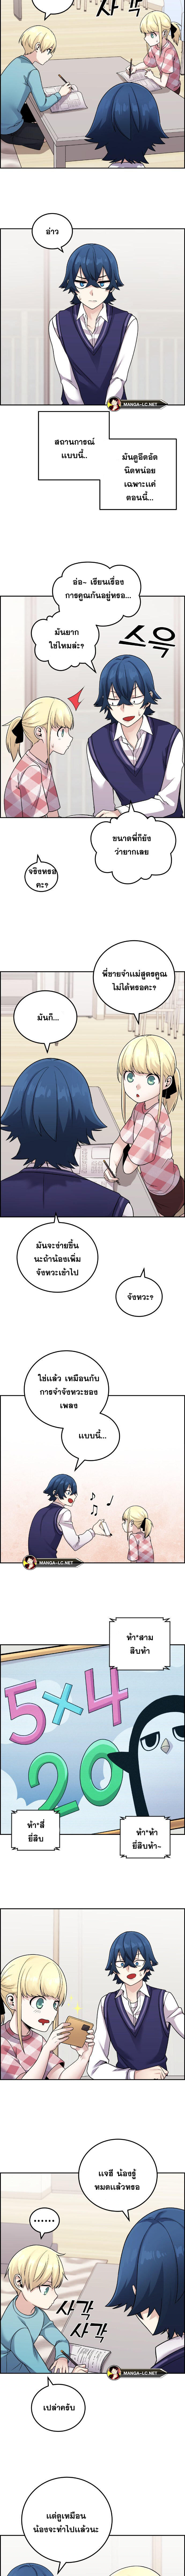 Webtoon Character Na Kang Lim ร ยธโ€ขร ยธยญร ยธโขร ยธโ€”ร ยธยตร ยนห 30 (8)